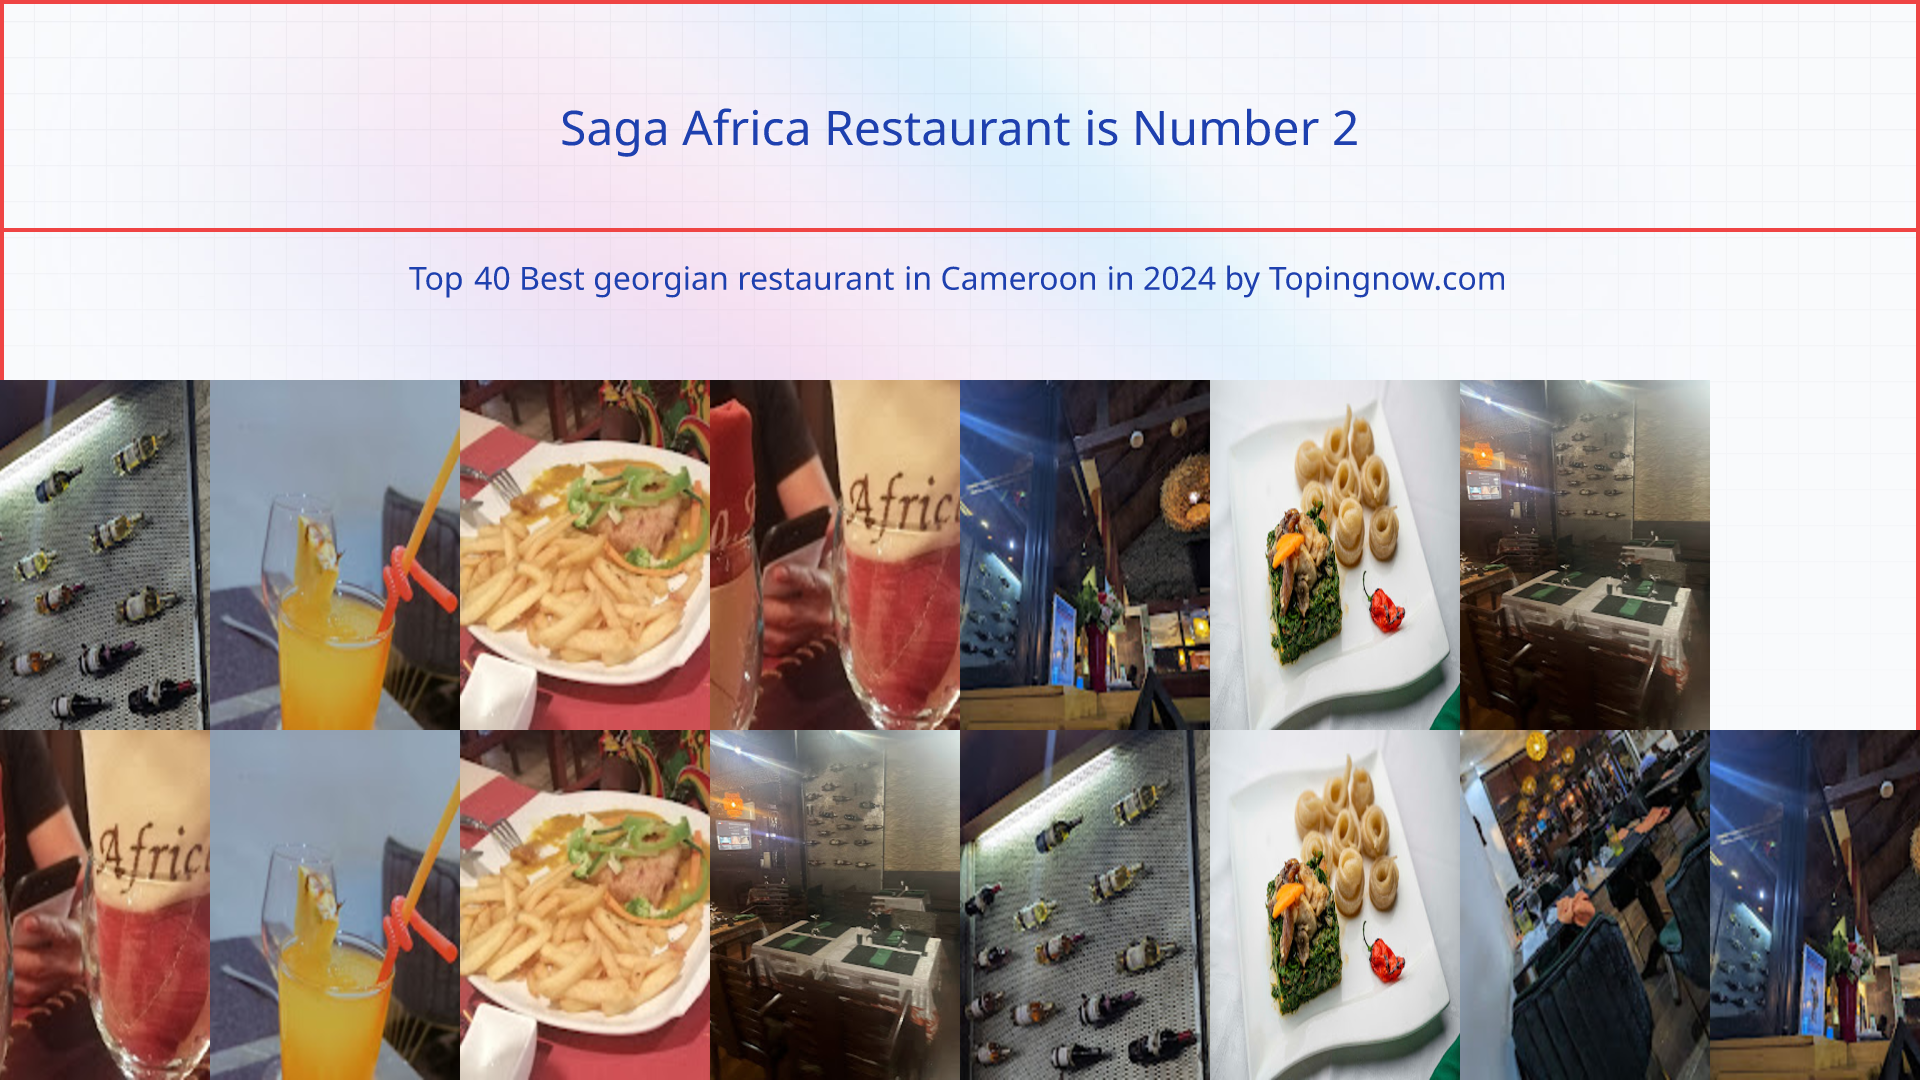 Saga Africa Restaurant: Top 40 Best georgian restaurant in Cameroon in 2024